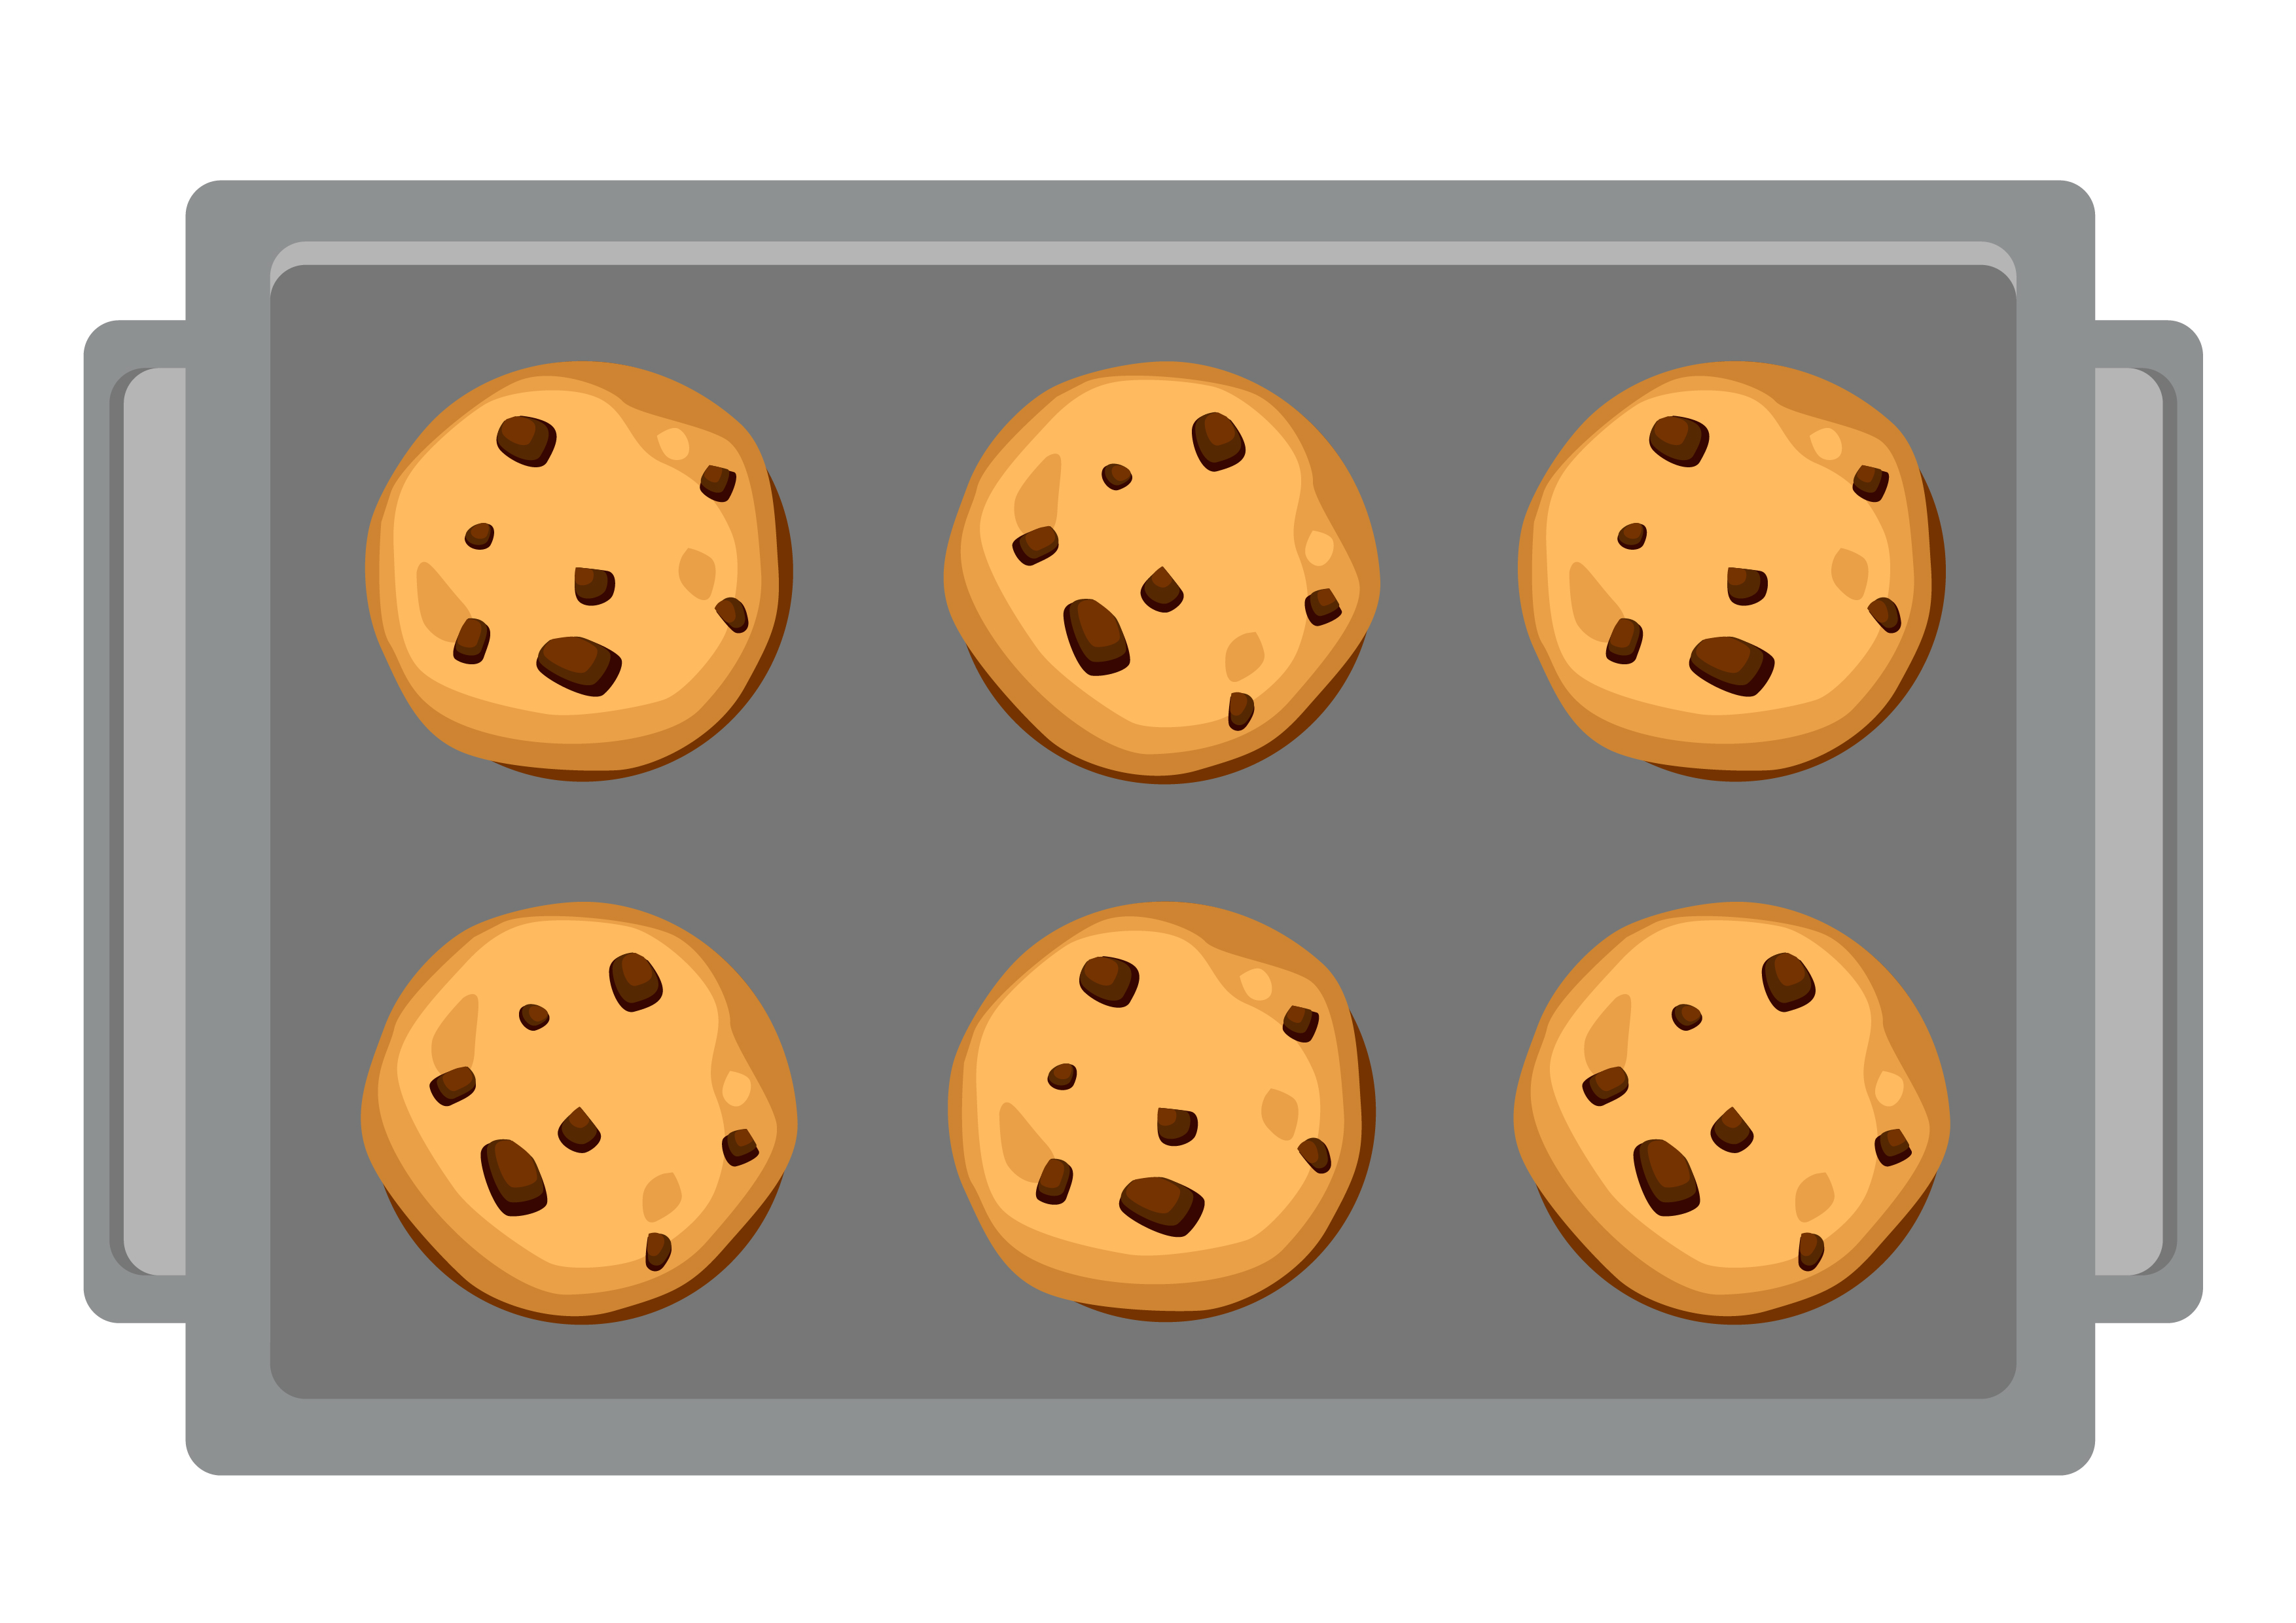 Cookies 01